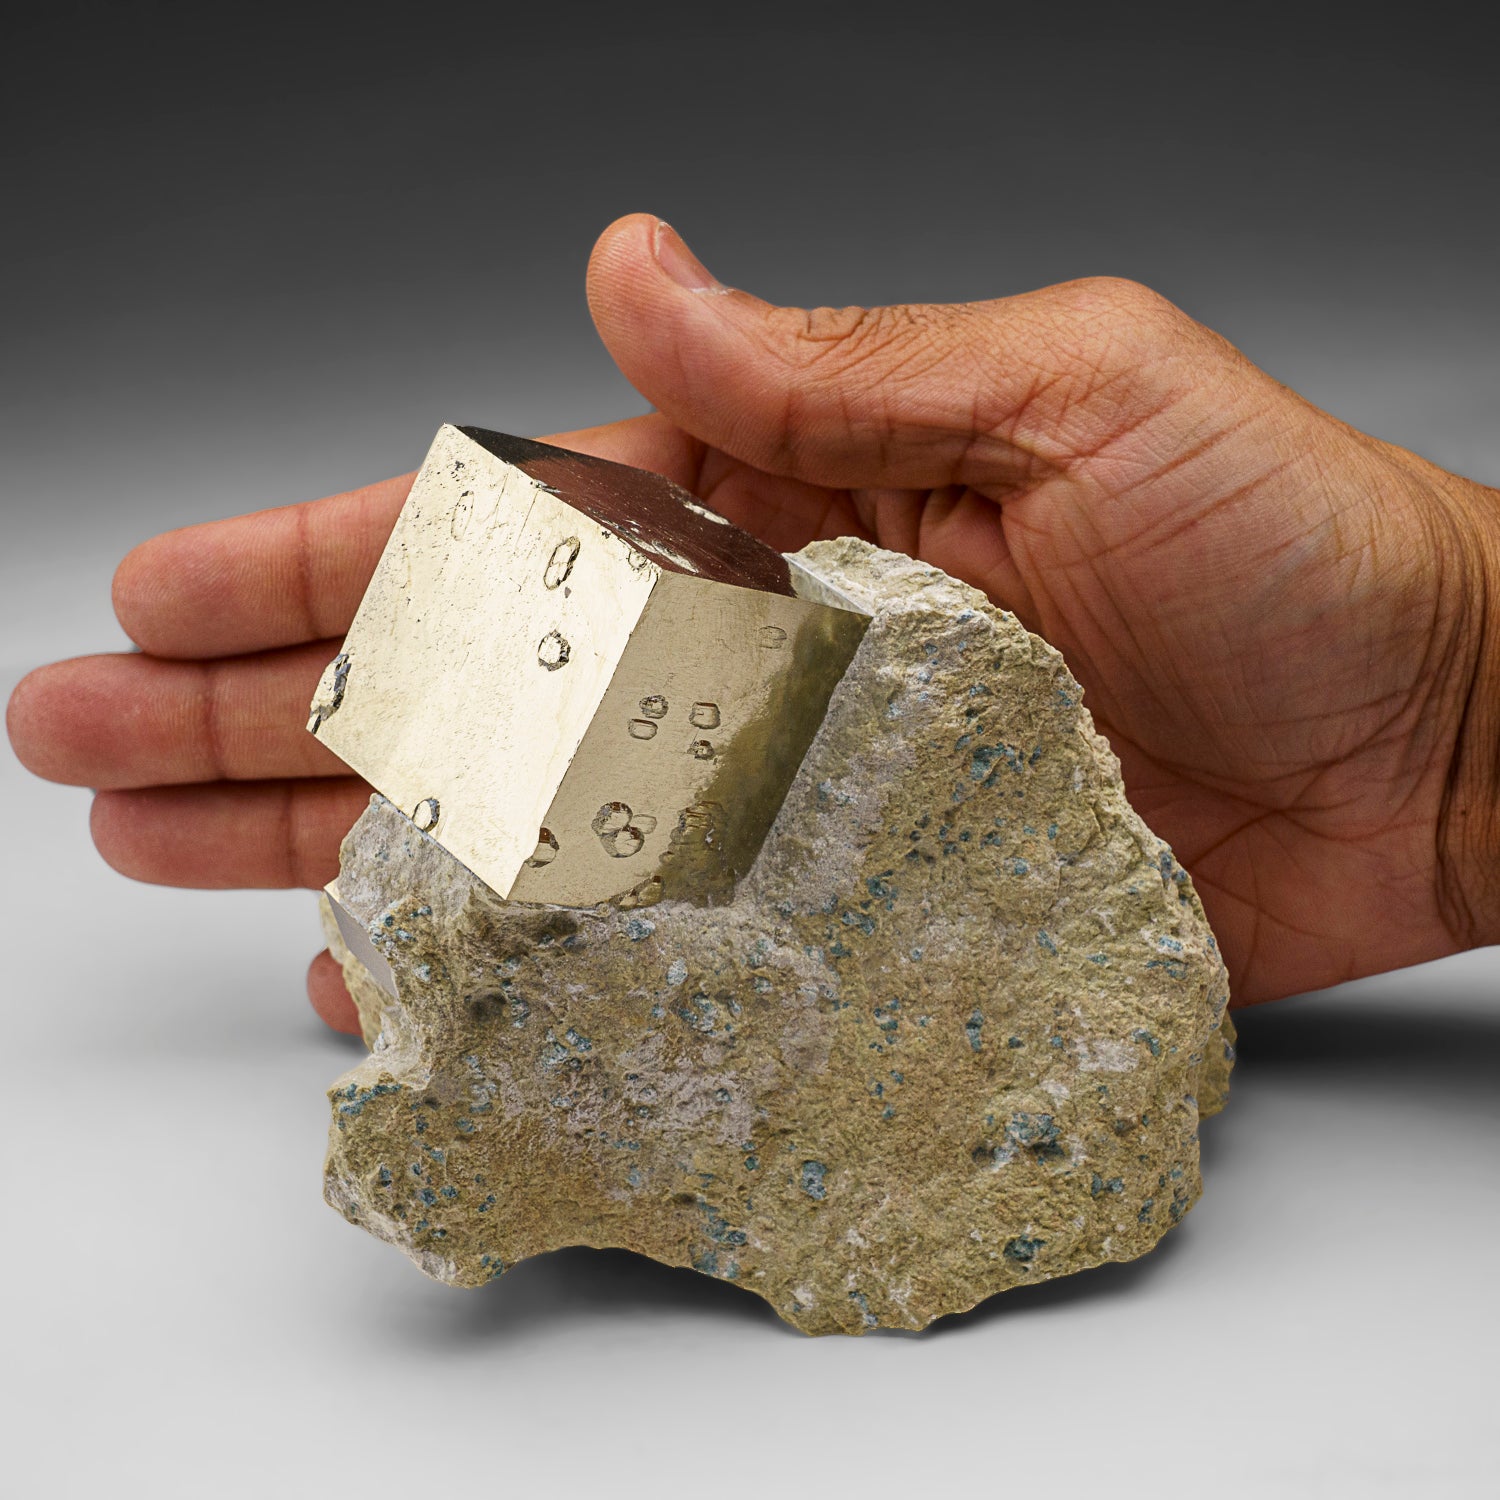 Pyrite Cube on Basalt from Navajún, La Rioja Province, Spain (2.1 lbs)